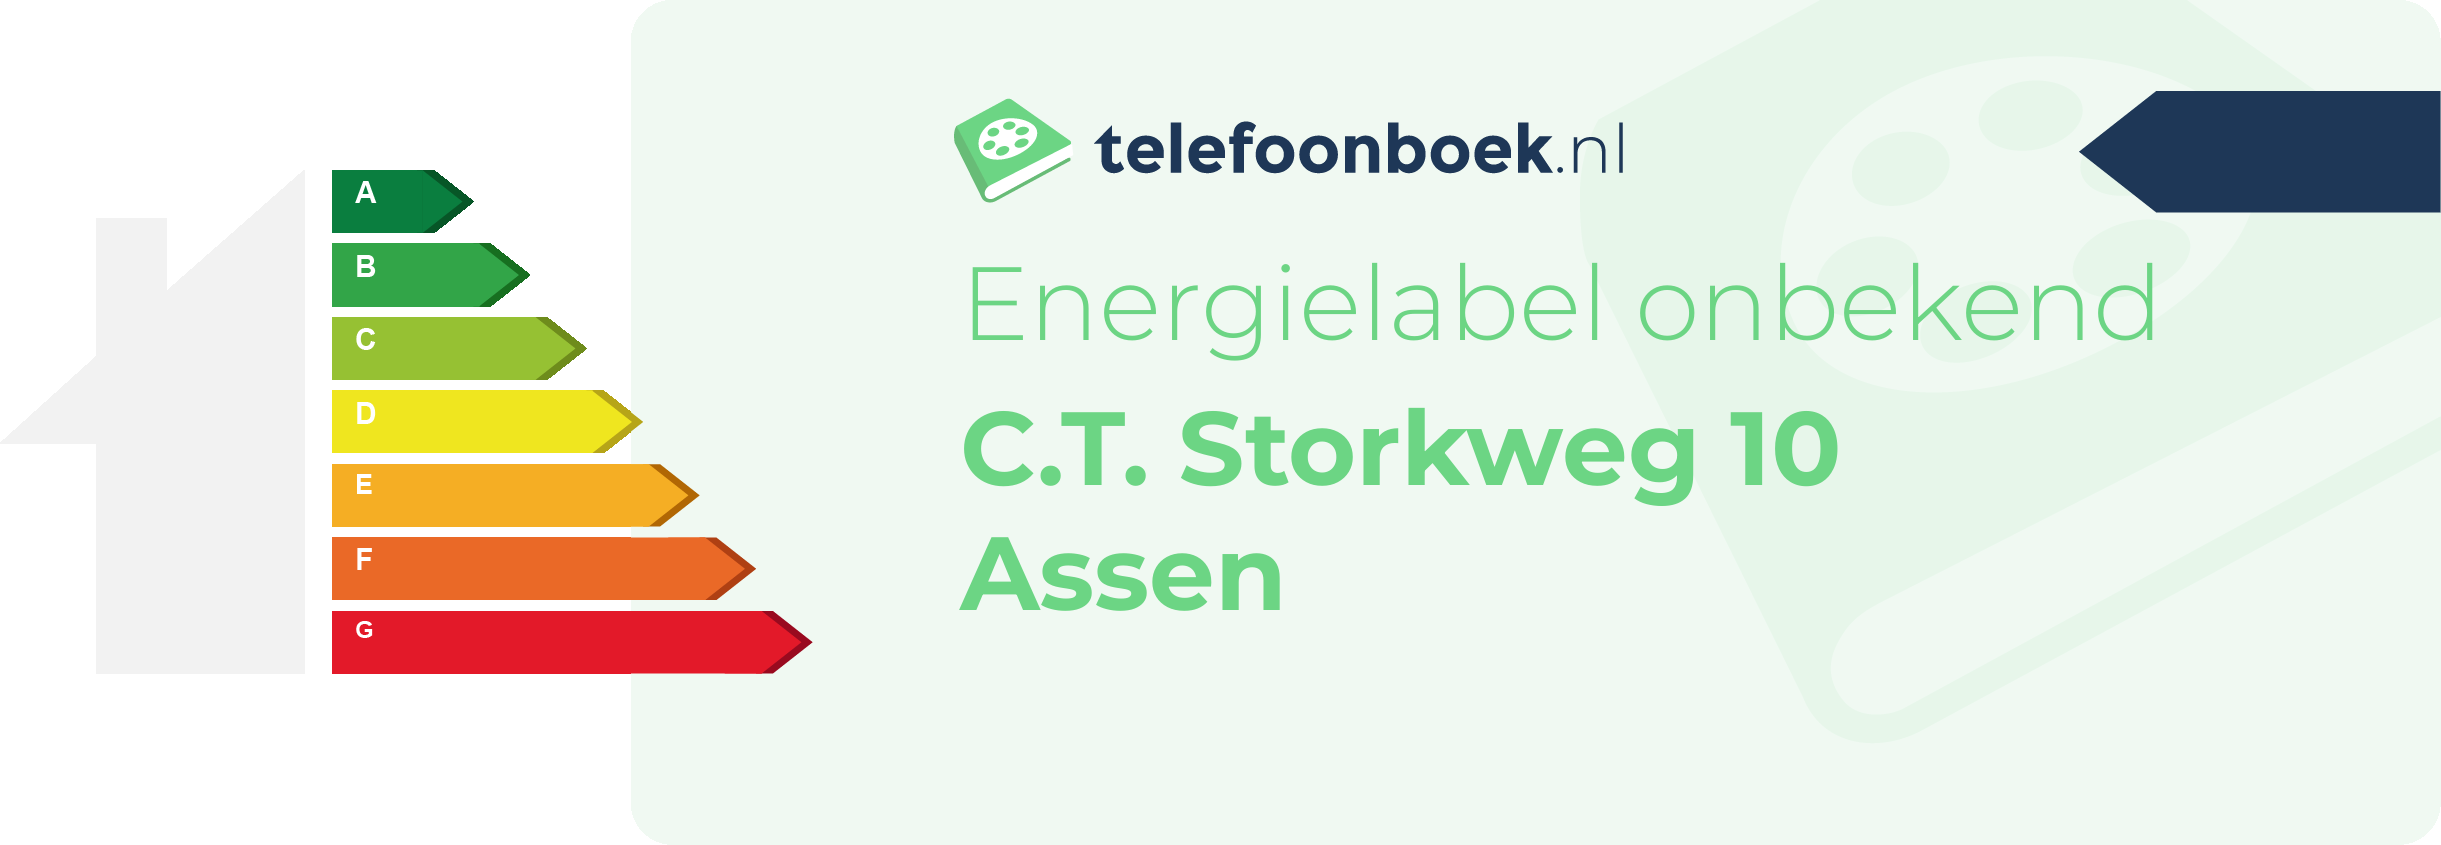 Energielabel C.T. Storkweg 10 Assen